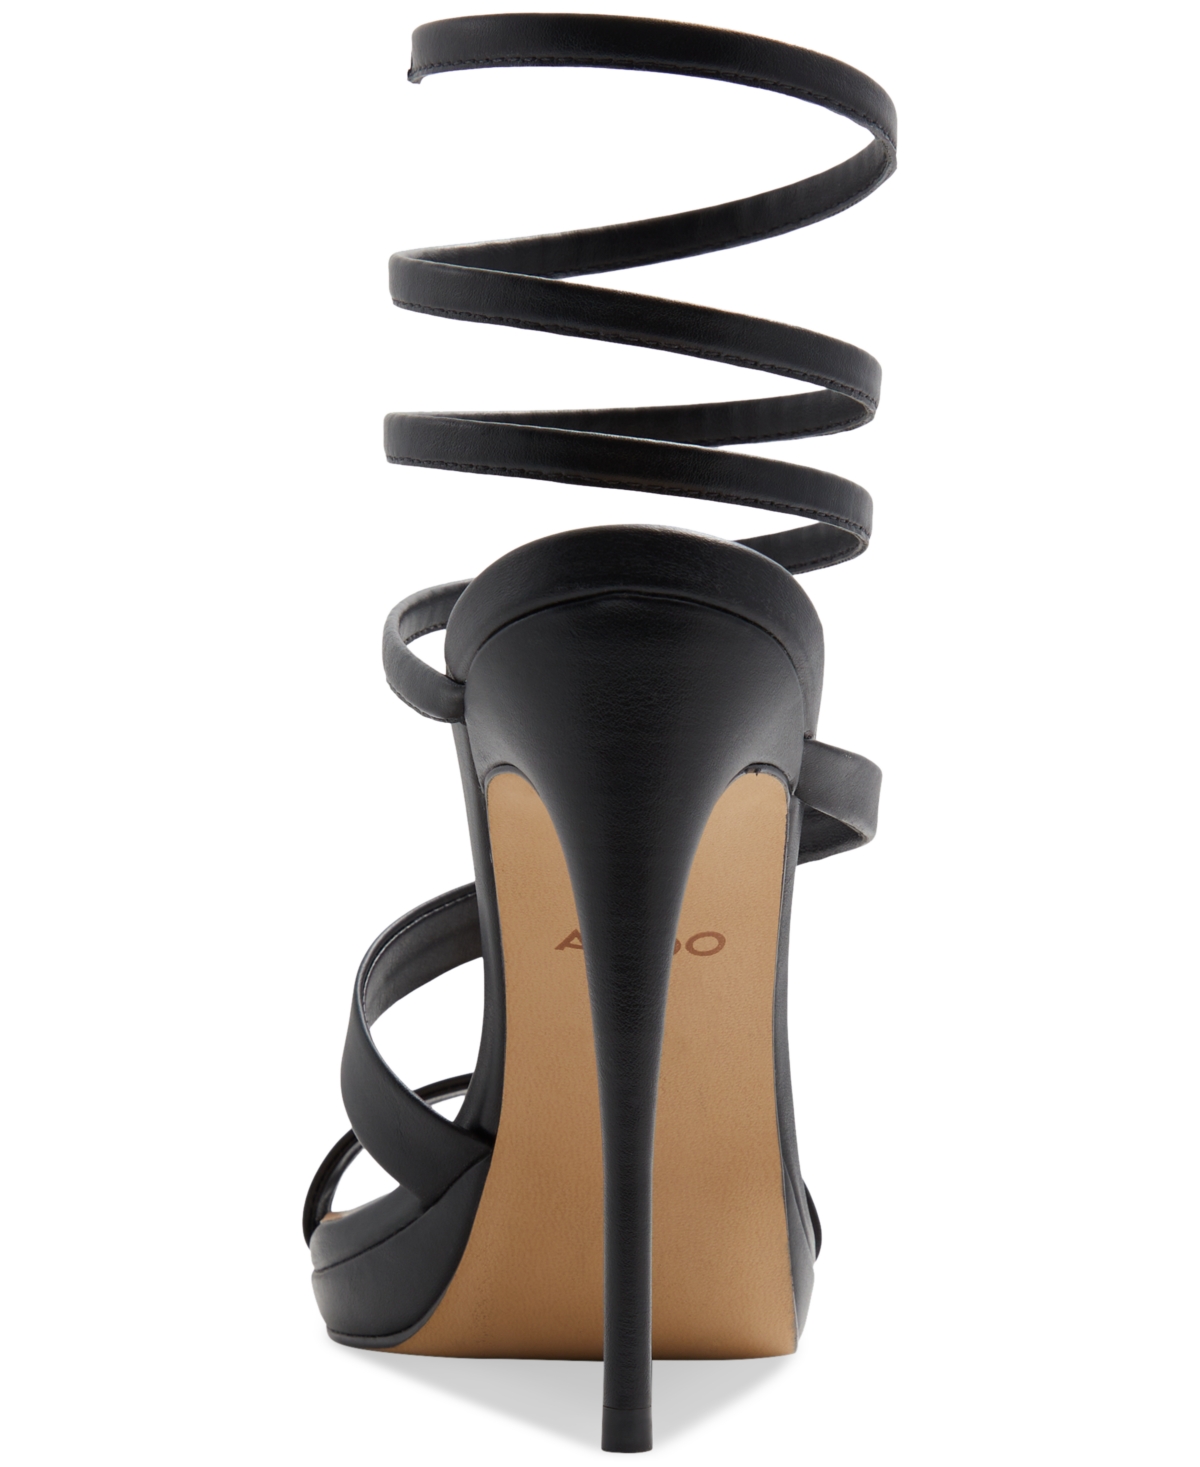 Shop Aldo Women's Kat Leg-wrap Platform Dress Sandals In Metallic Silver